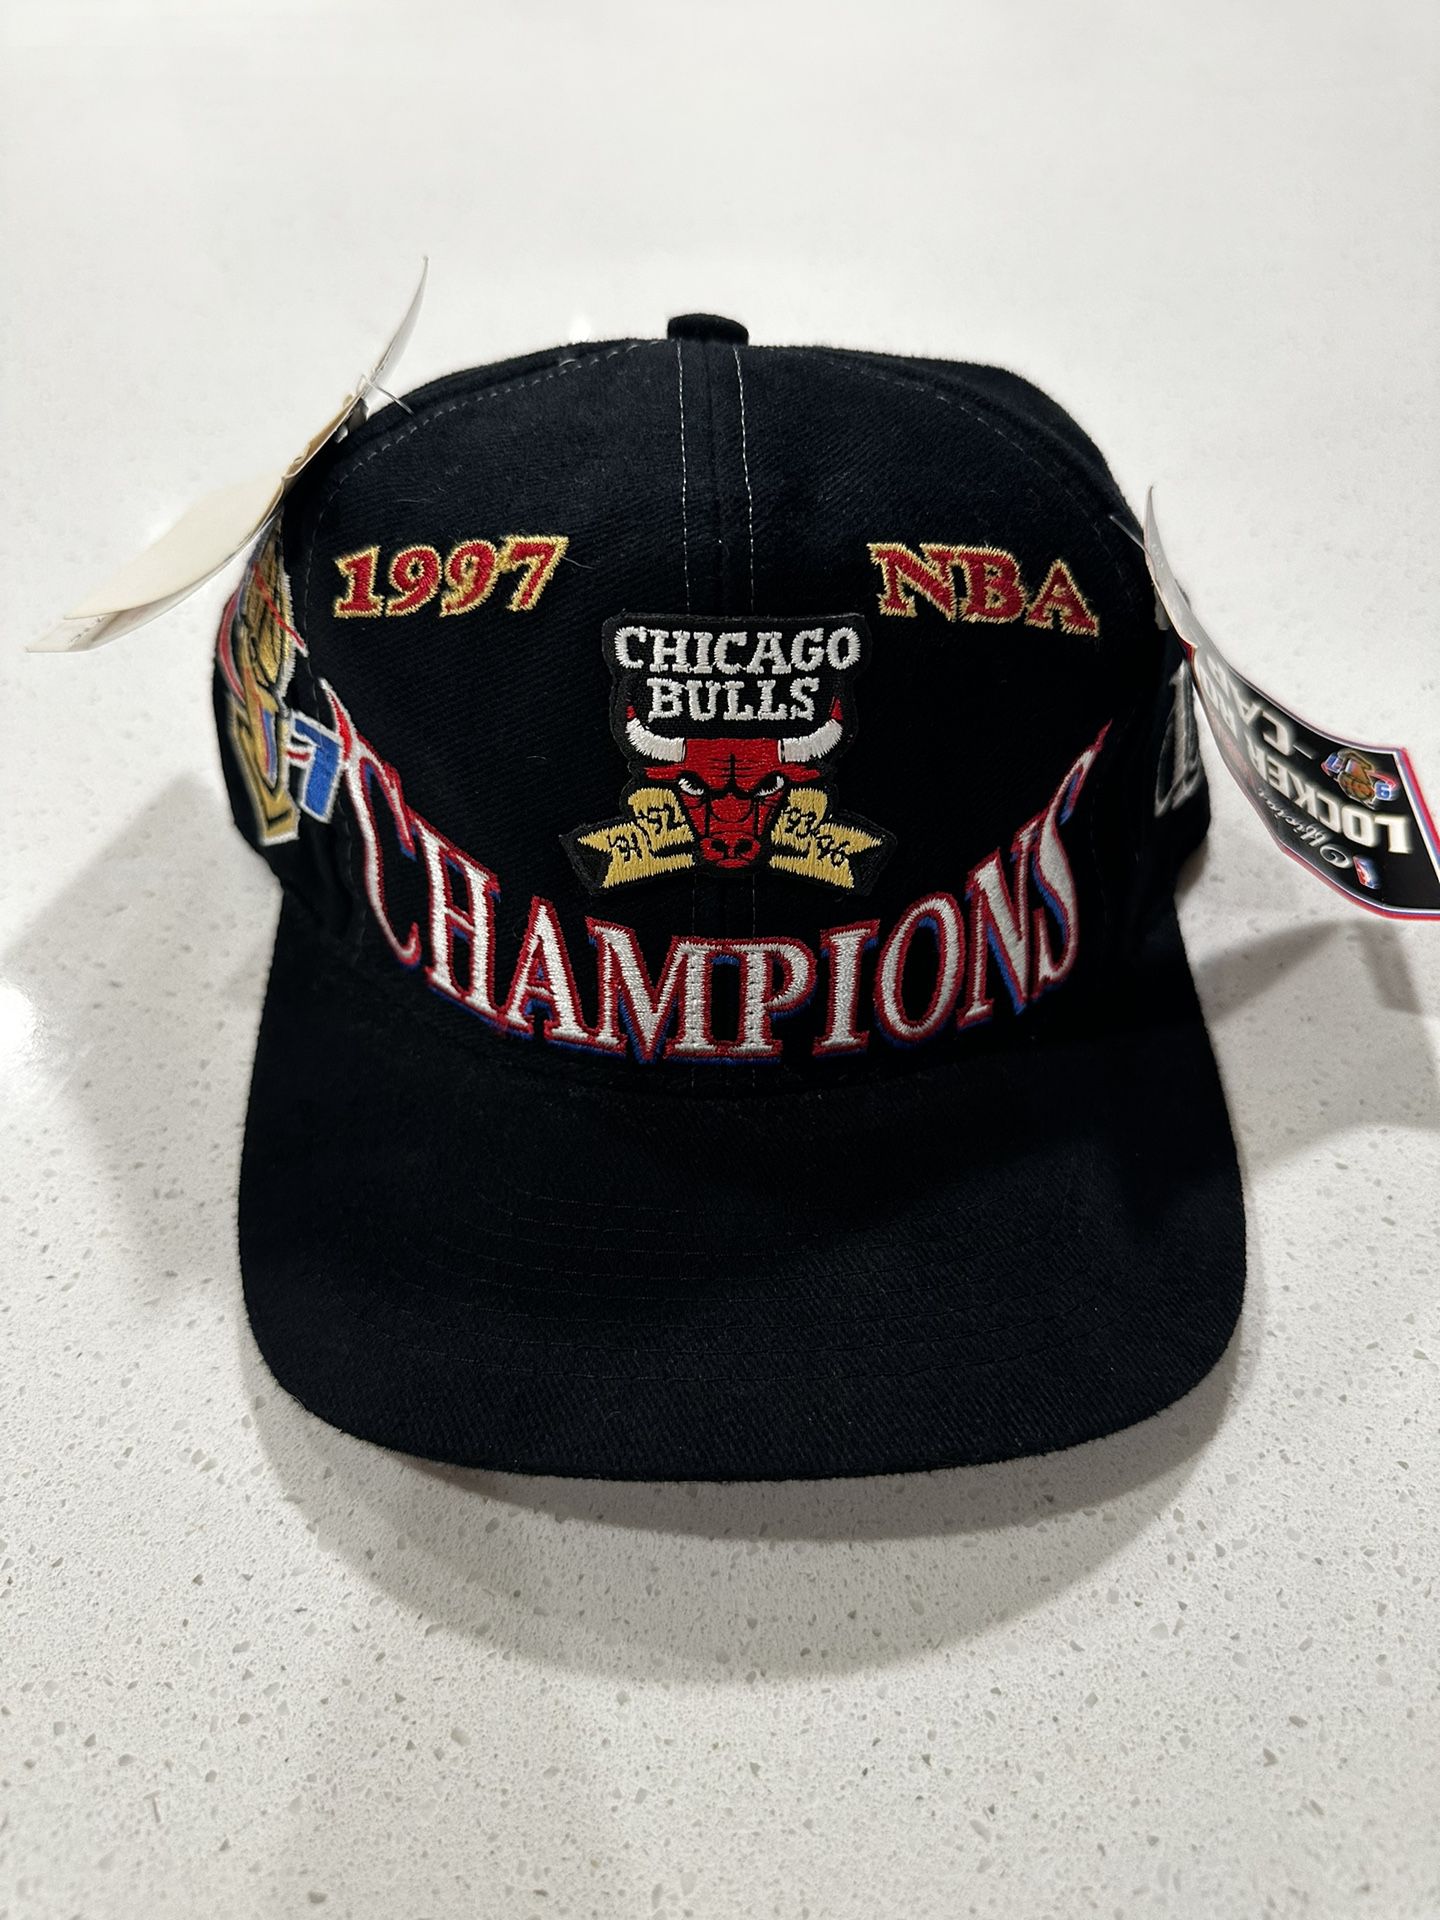 Chicago Bulls 1997 Locker Room Hat for Sale in Corona, CA - OfferUp